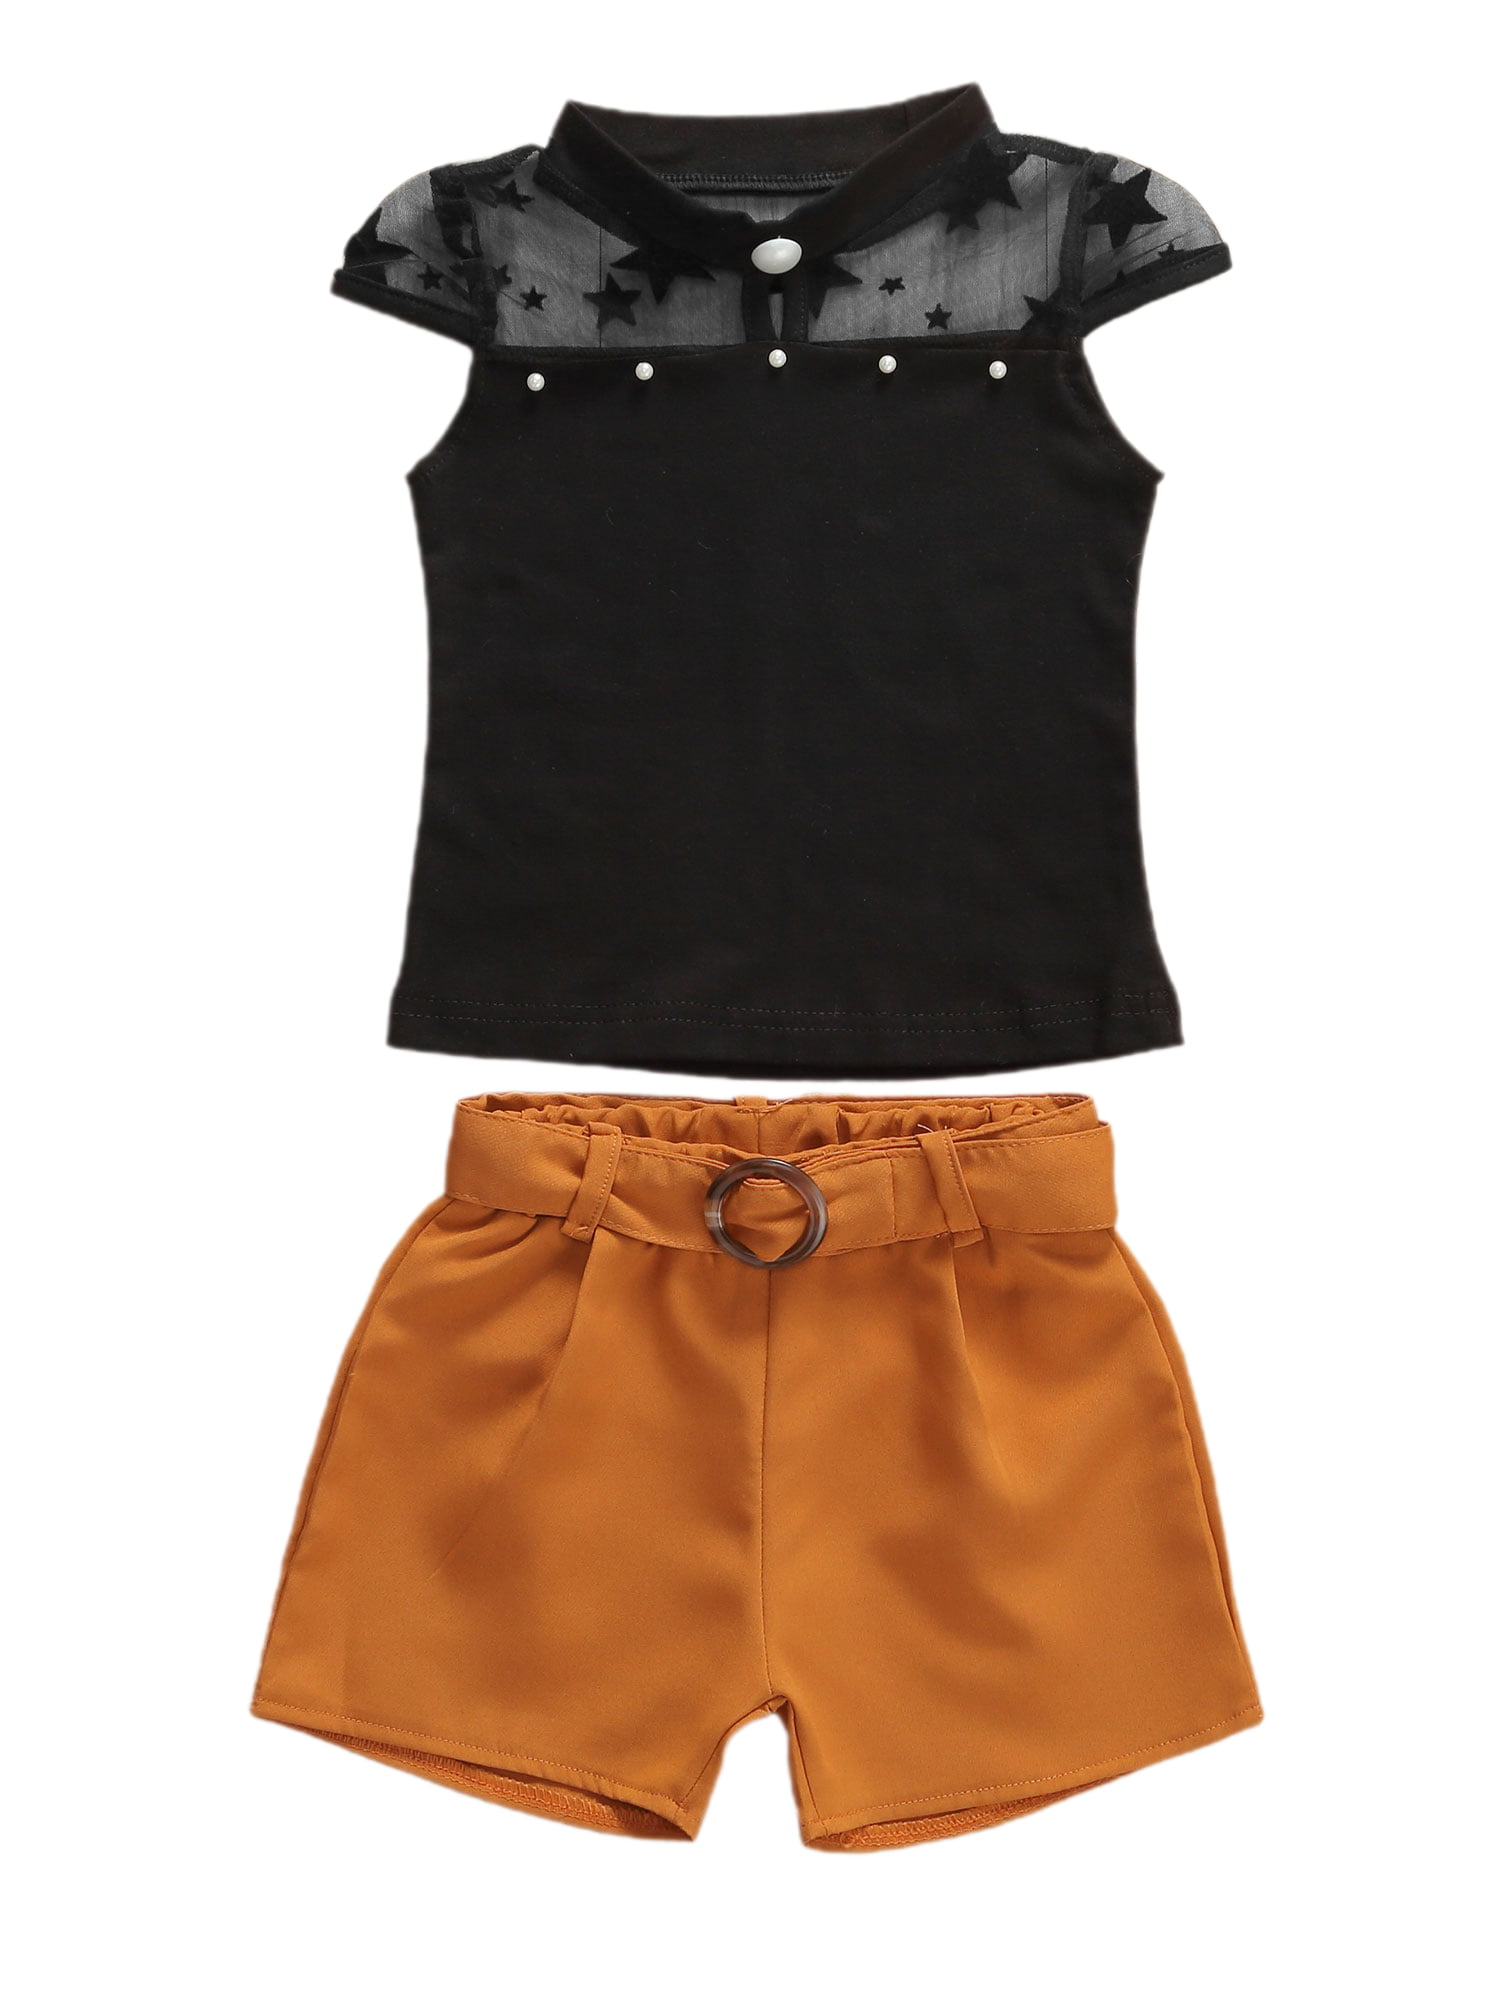 2pcs Toddler Kids Baby Boy Clothes Corsair T-shirt Tops Short Pants Outfit Set 